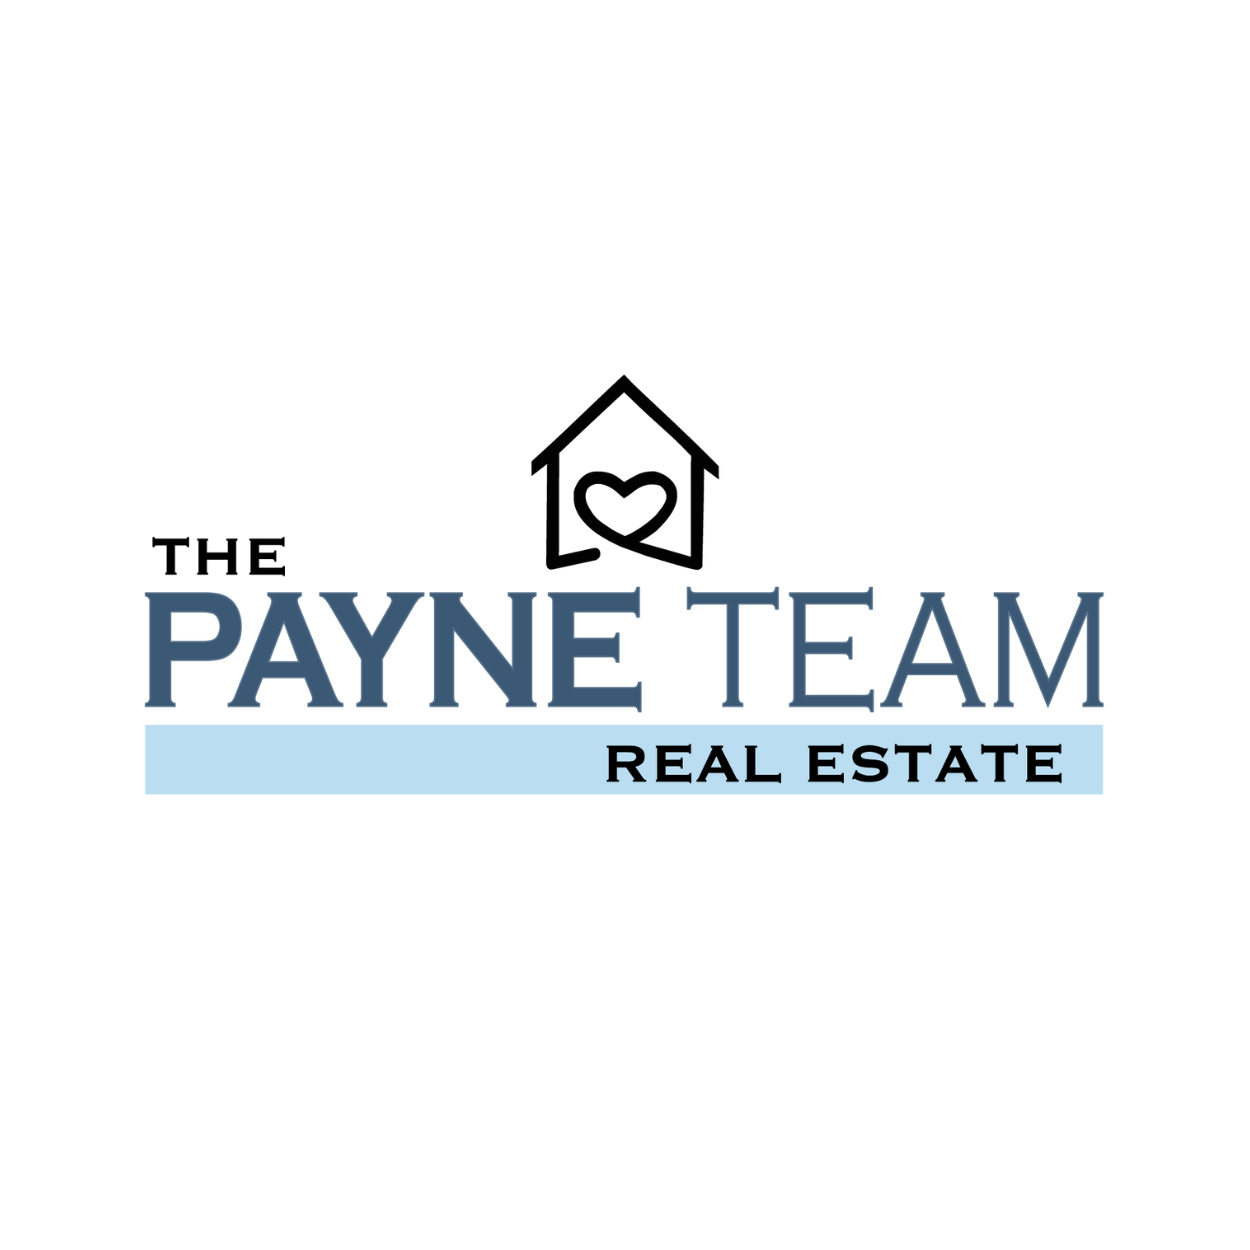 The Payne Team Real Estate